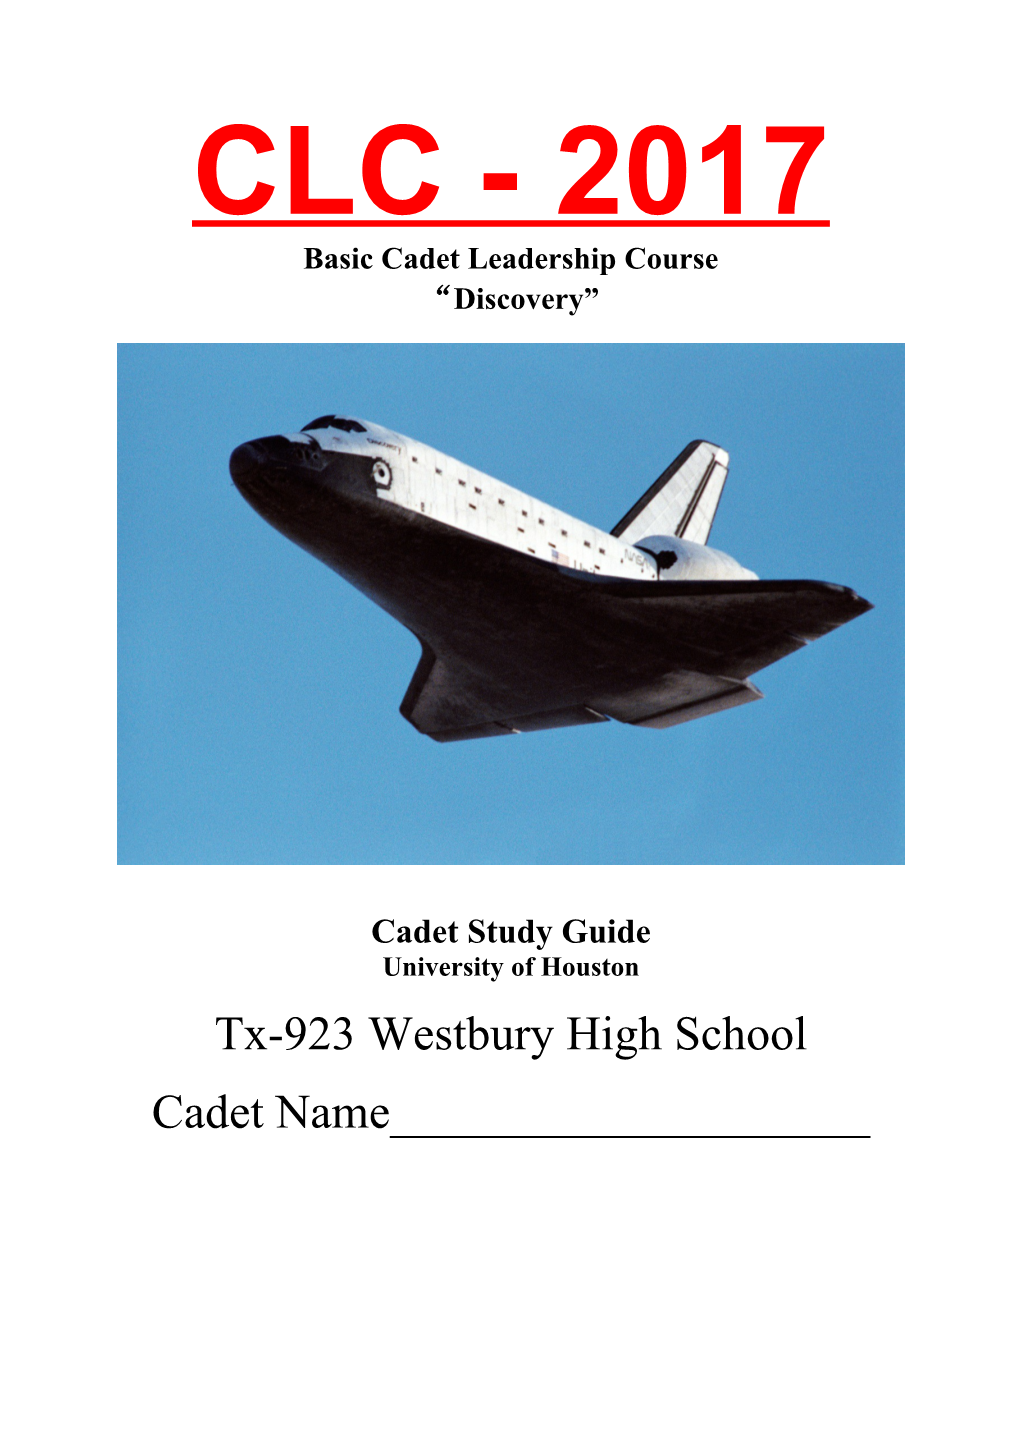 Basic Cadet Leadership Course